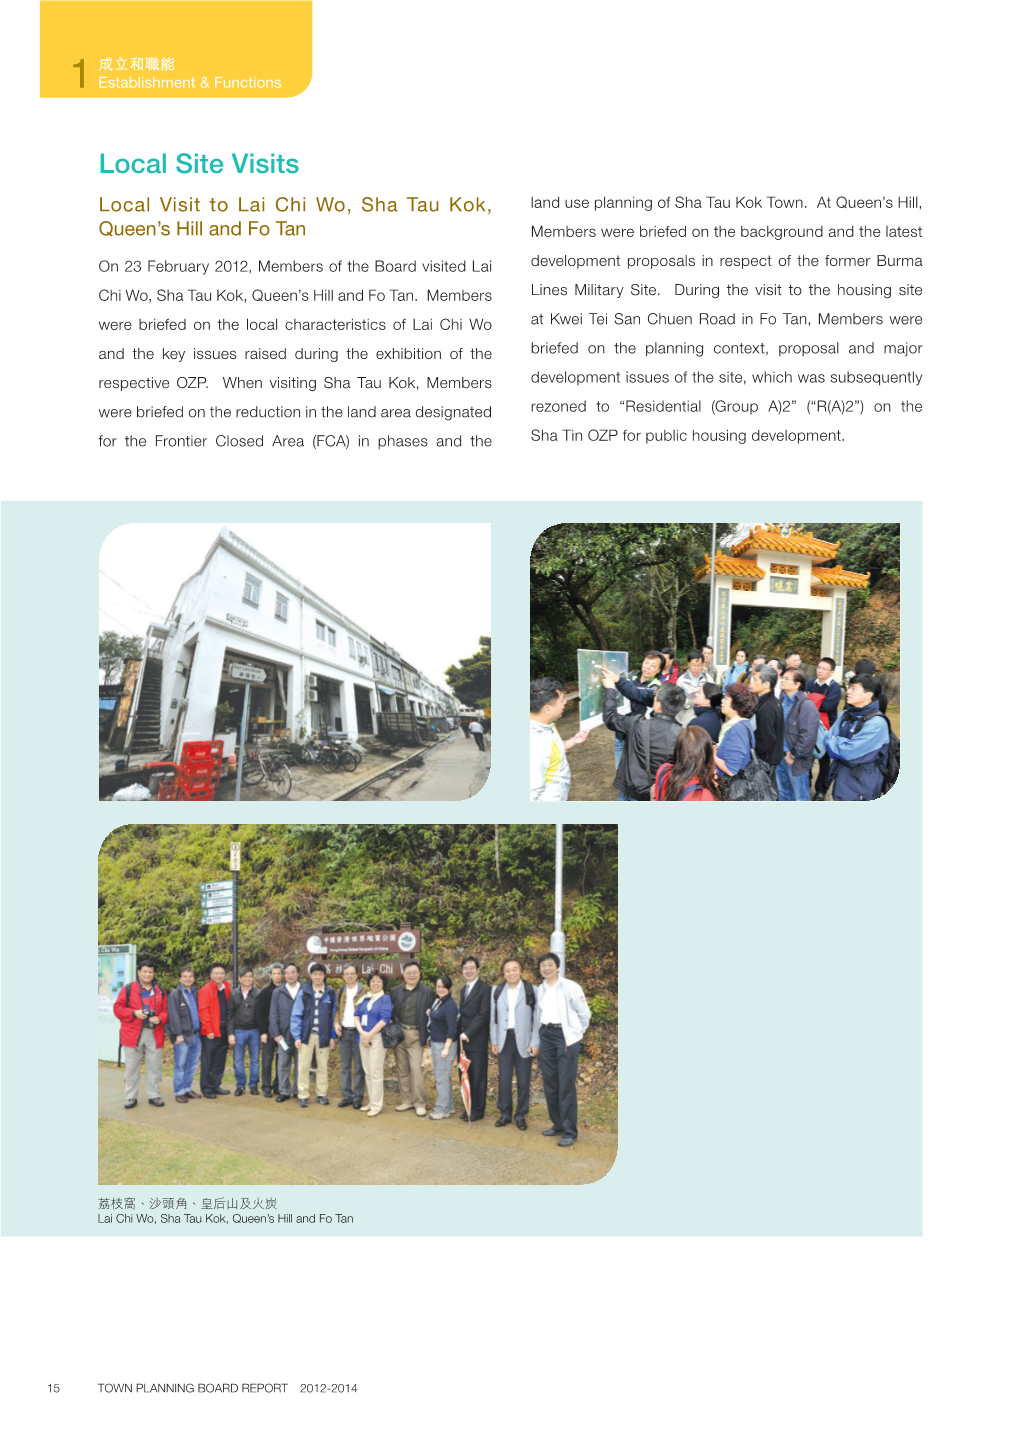 Local Site Visits Local Visit to Lai Chi Wo, Sha Tau Kok, Land Use Planning of Sha Tau Kok Town